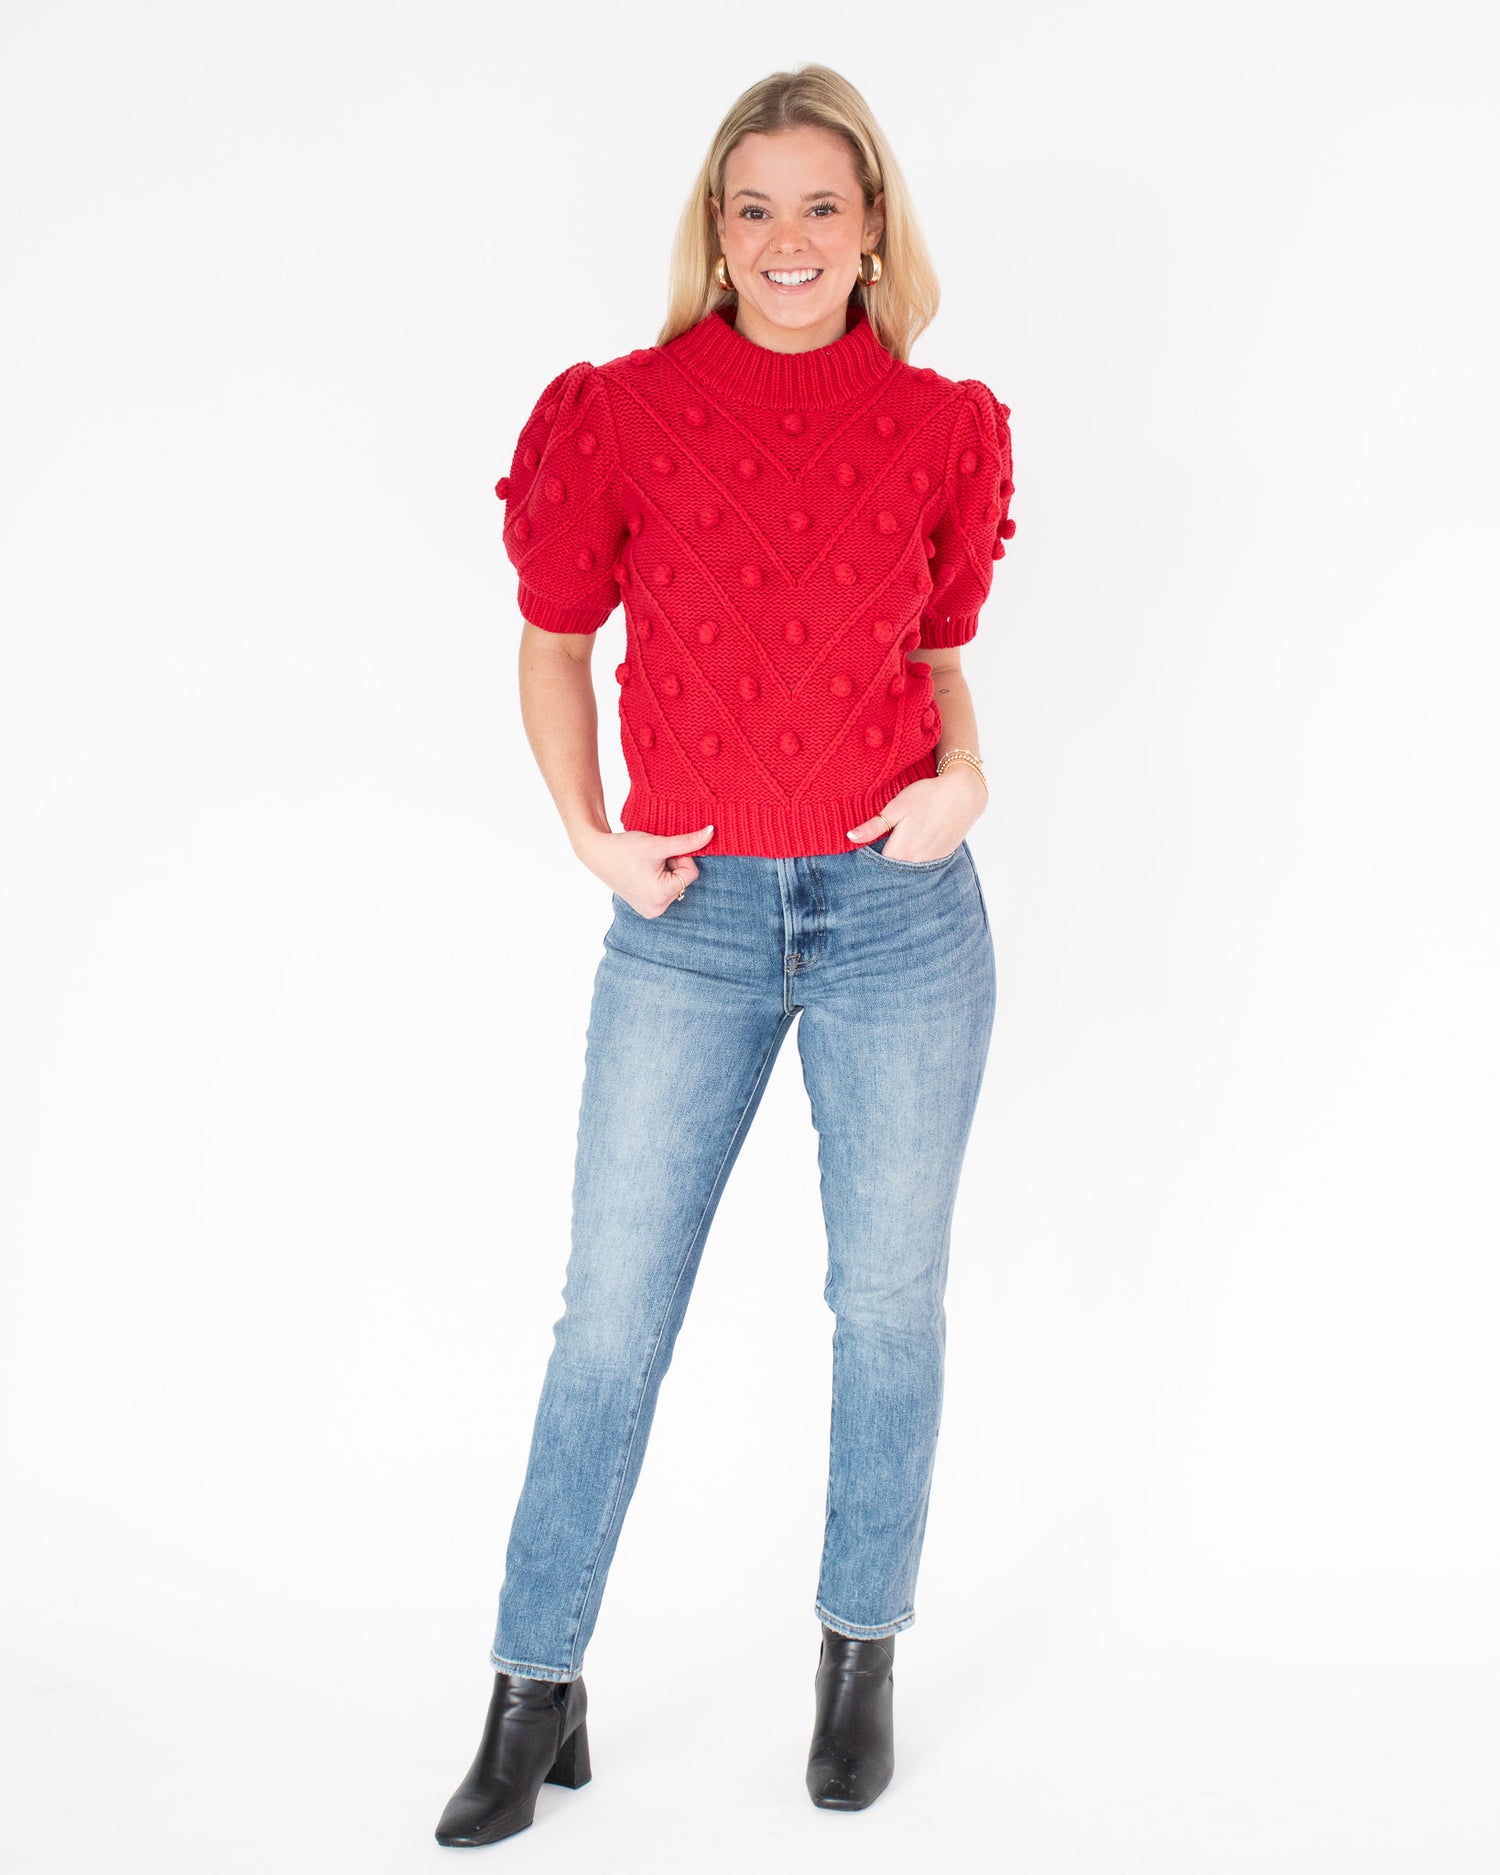 Pom Pom Puff Sleeve Knit Sweater - Deep Red